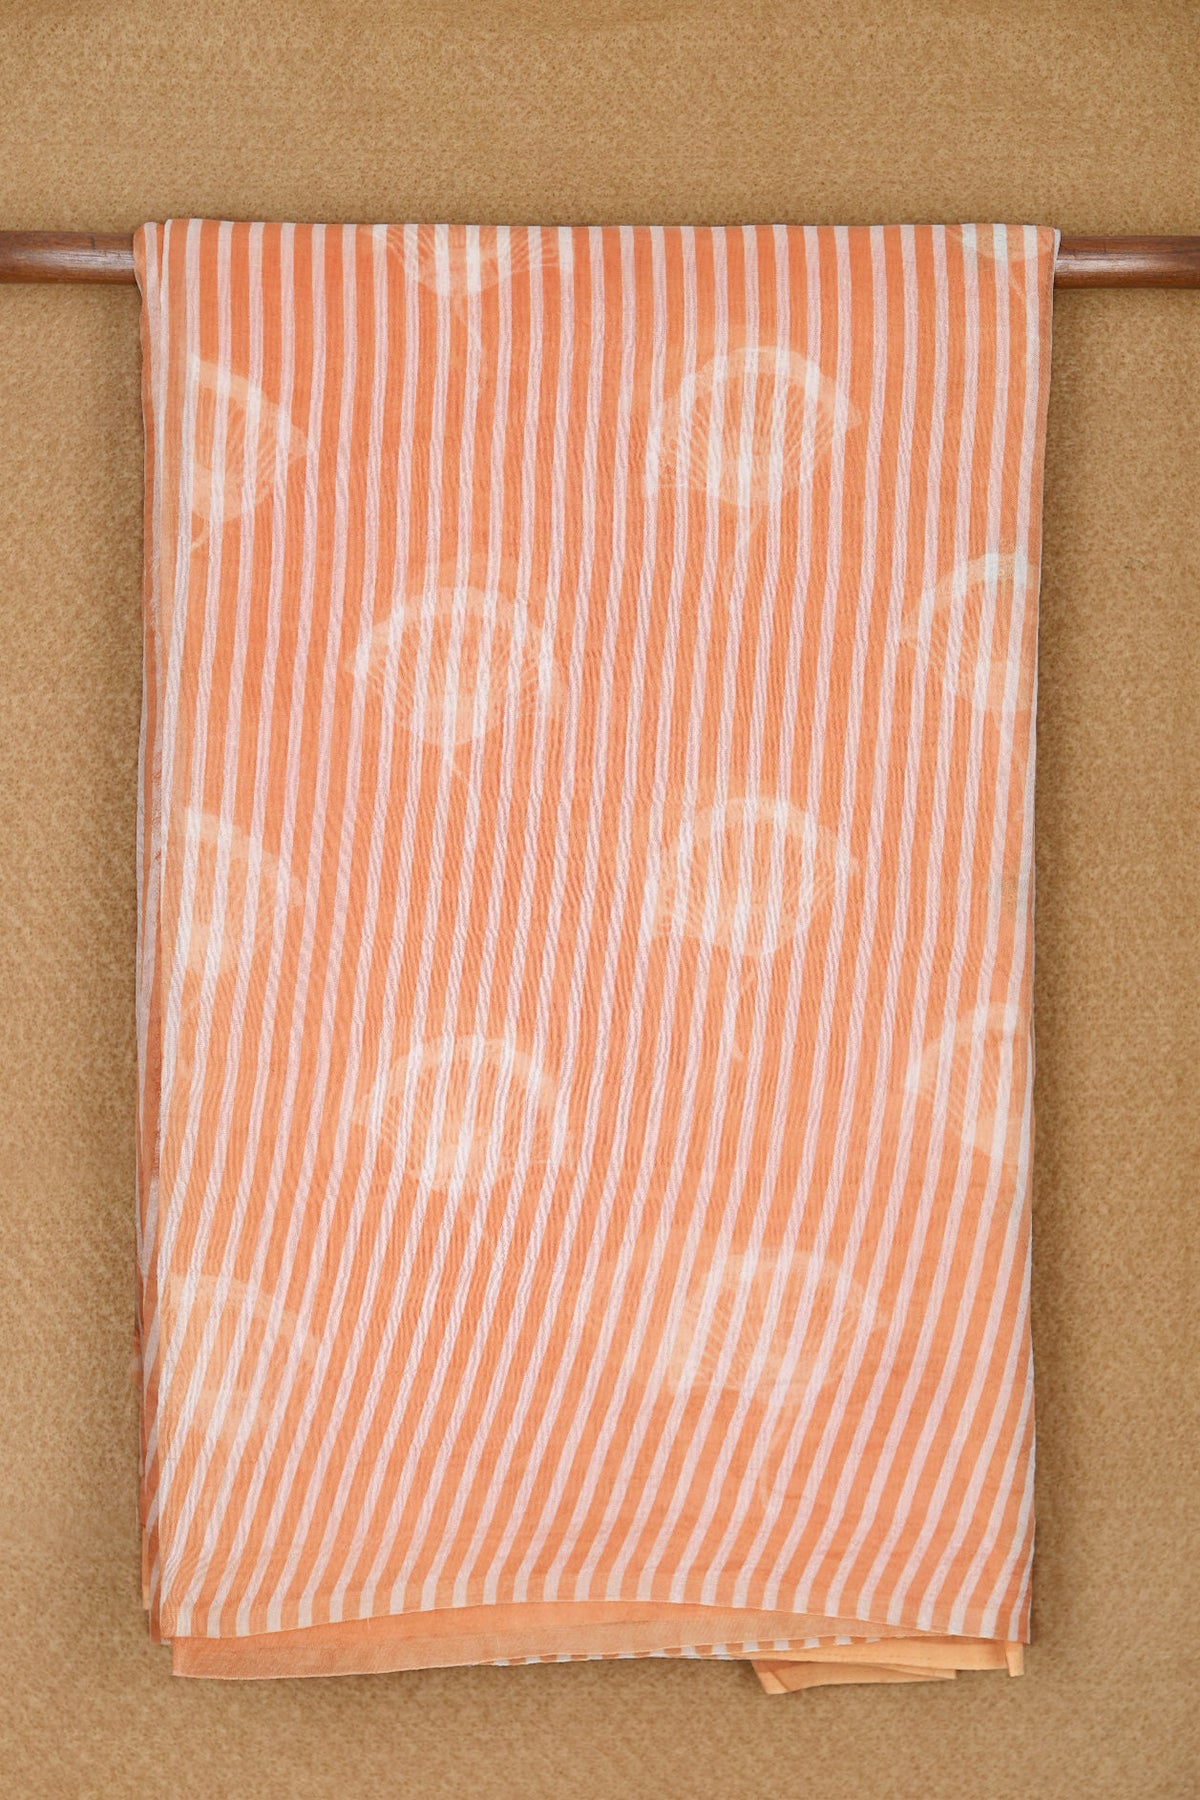 Printed Buttas Pastel Orange Organza Saree With Embroidered Blouse